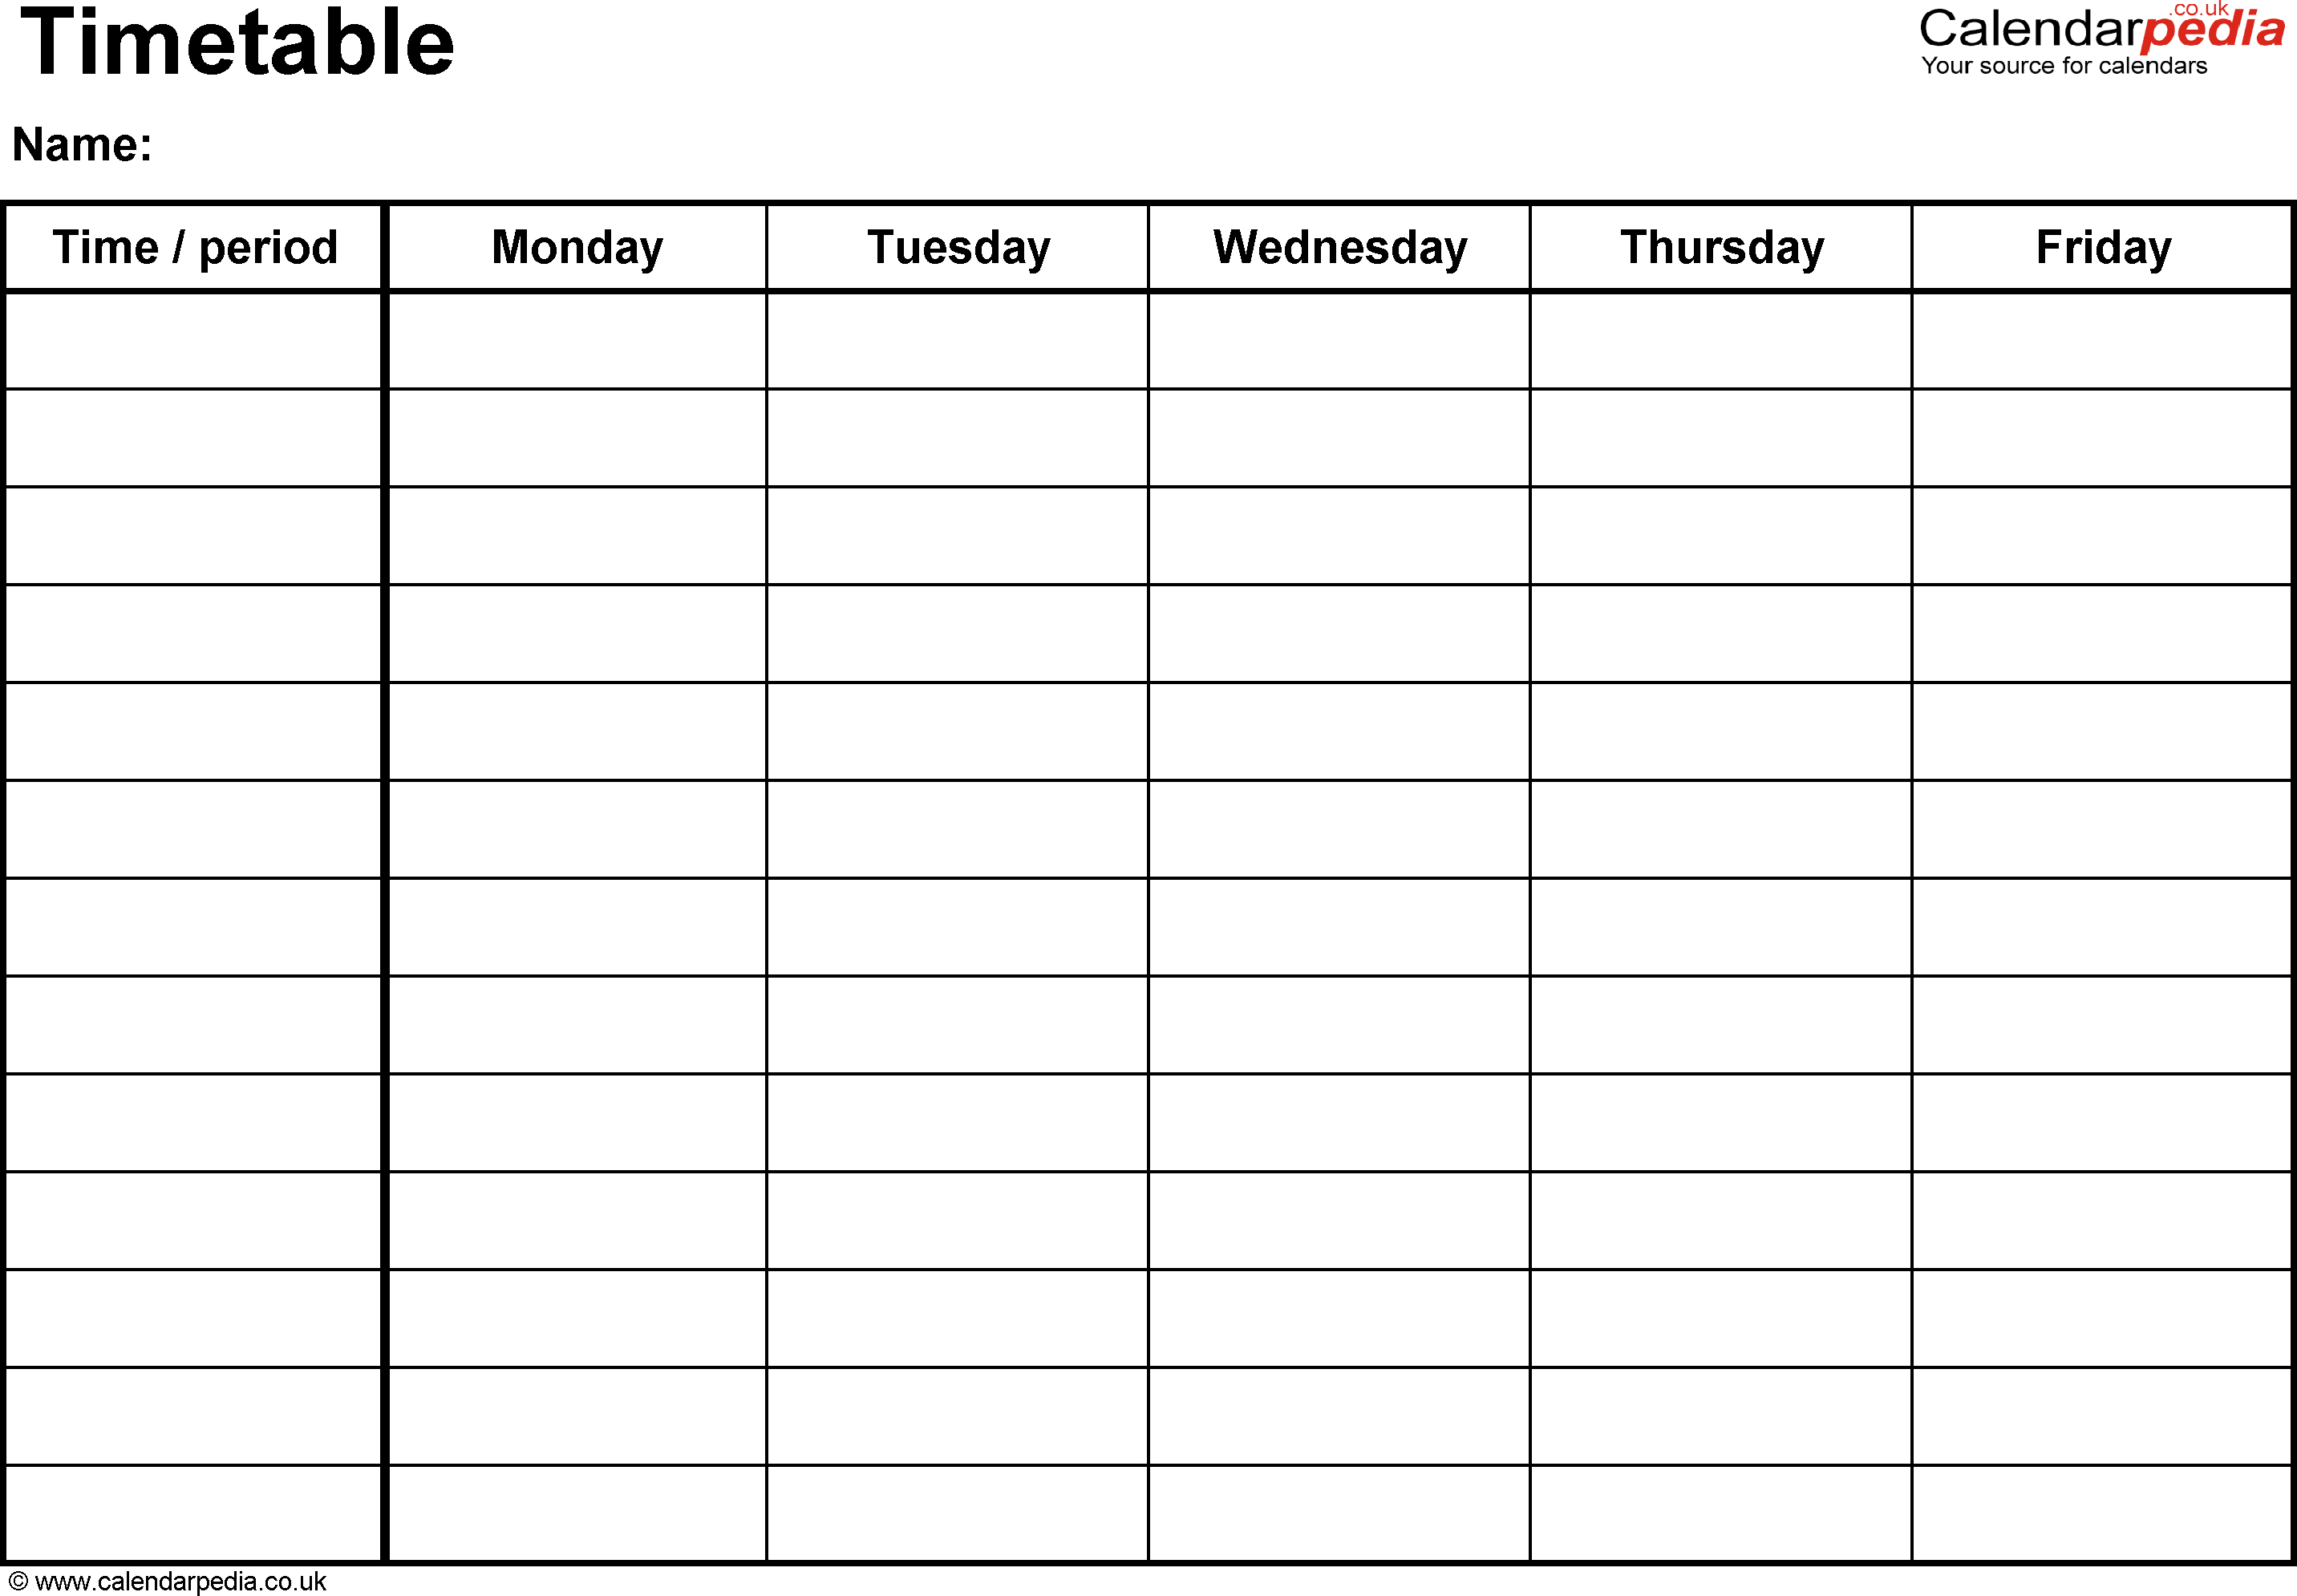 Timetable Templates For Pdf - Free And Printable